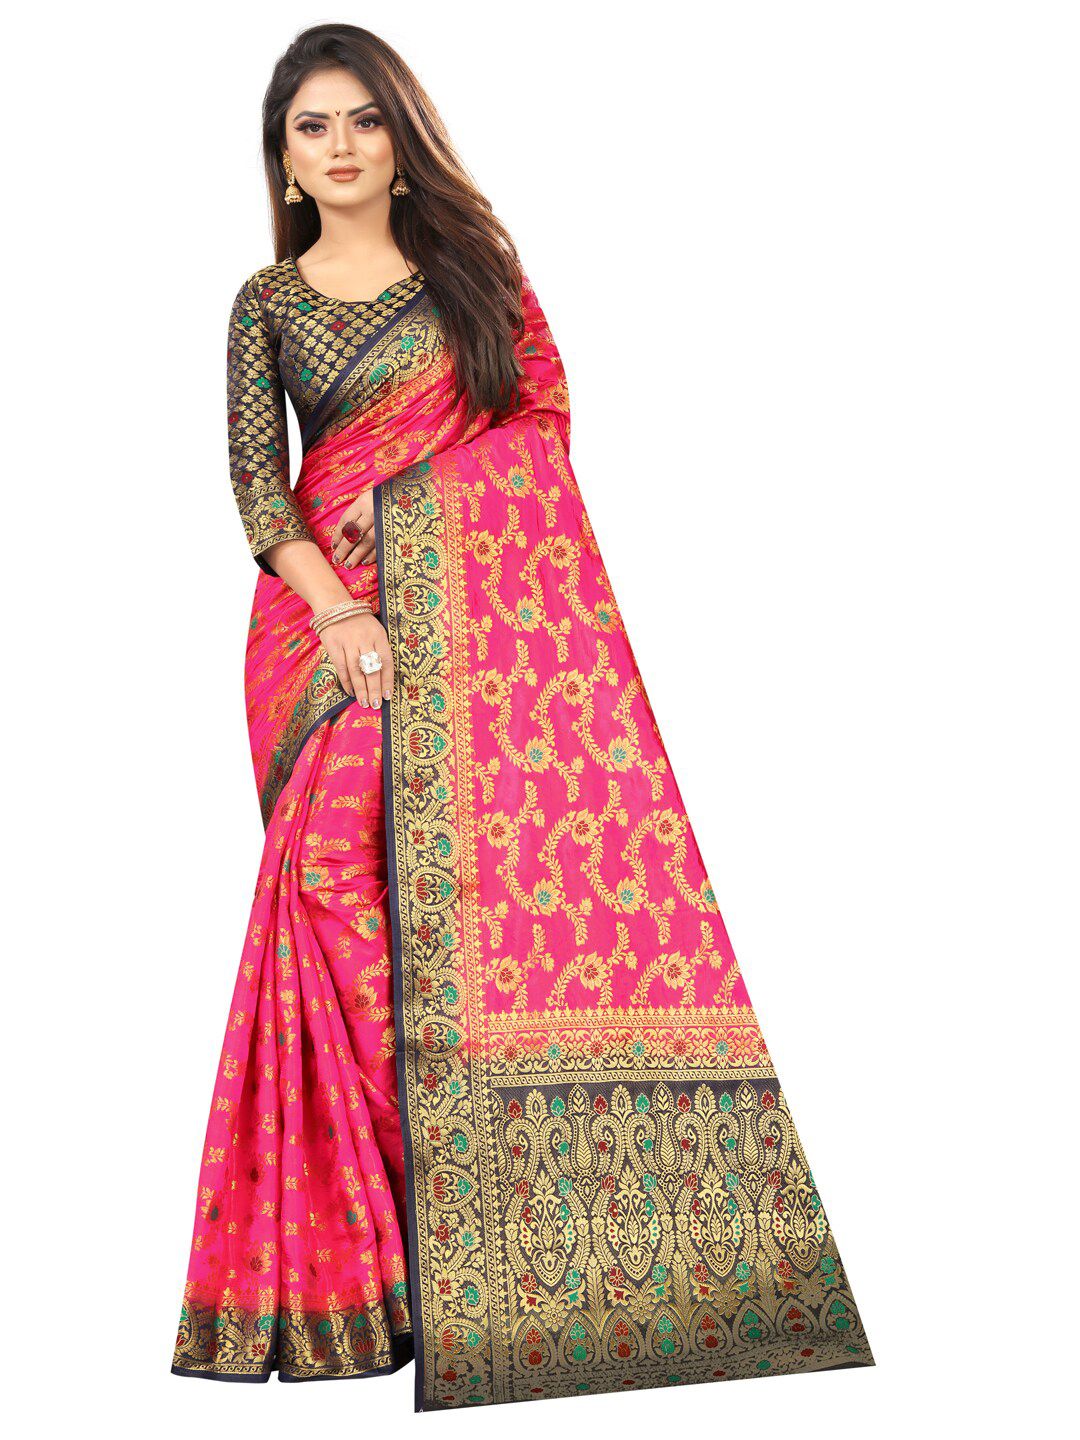 PERFECT WEAR Pink & Golden Ethnic Motifs Silk Cotton Banarasi Saree Price in India